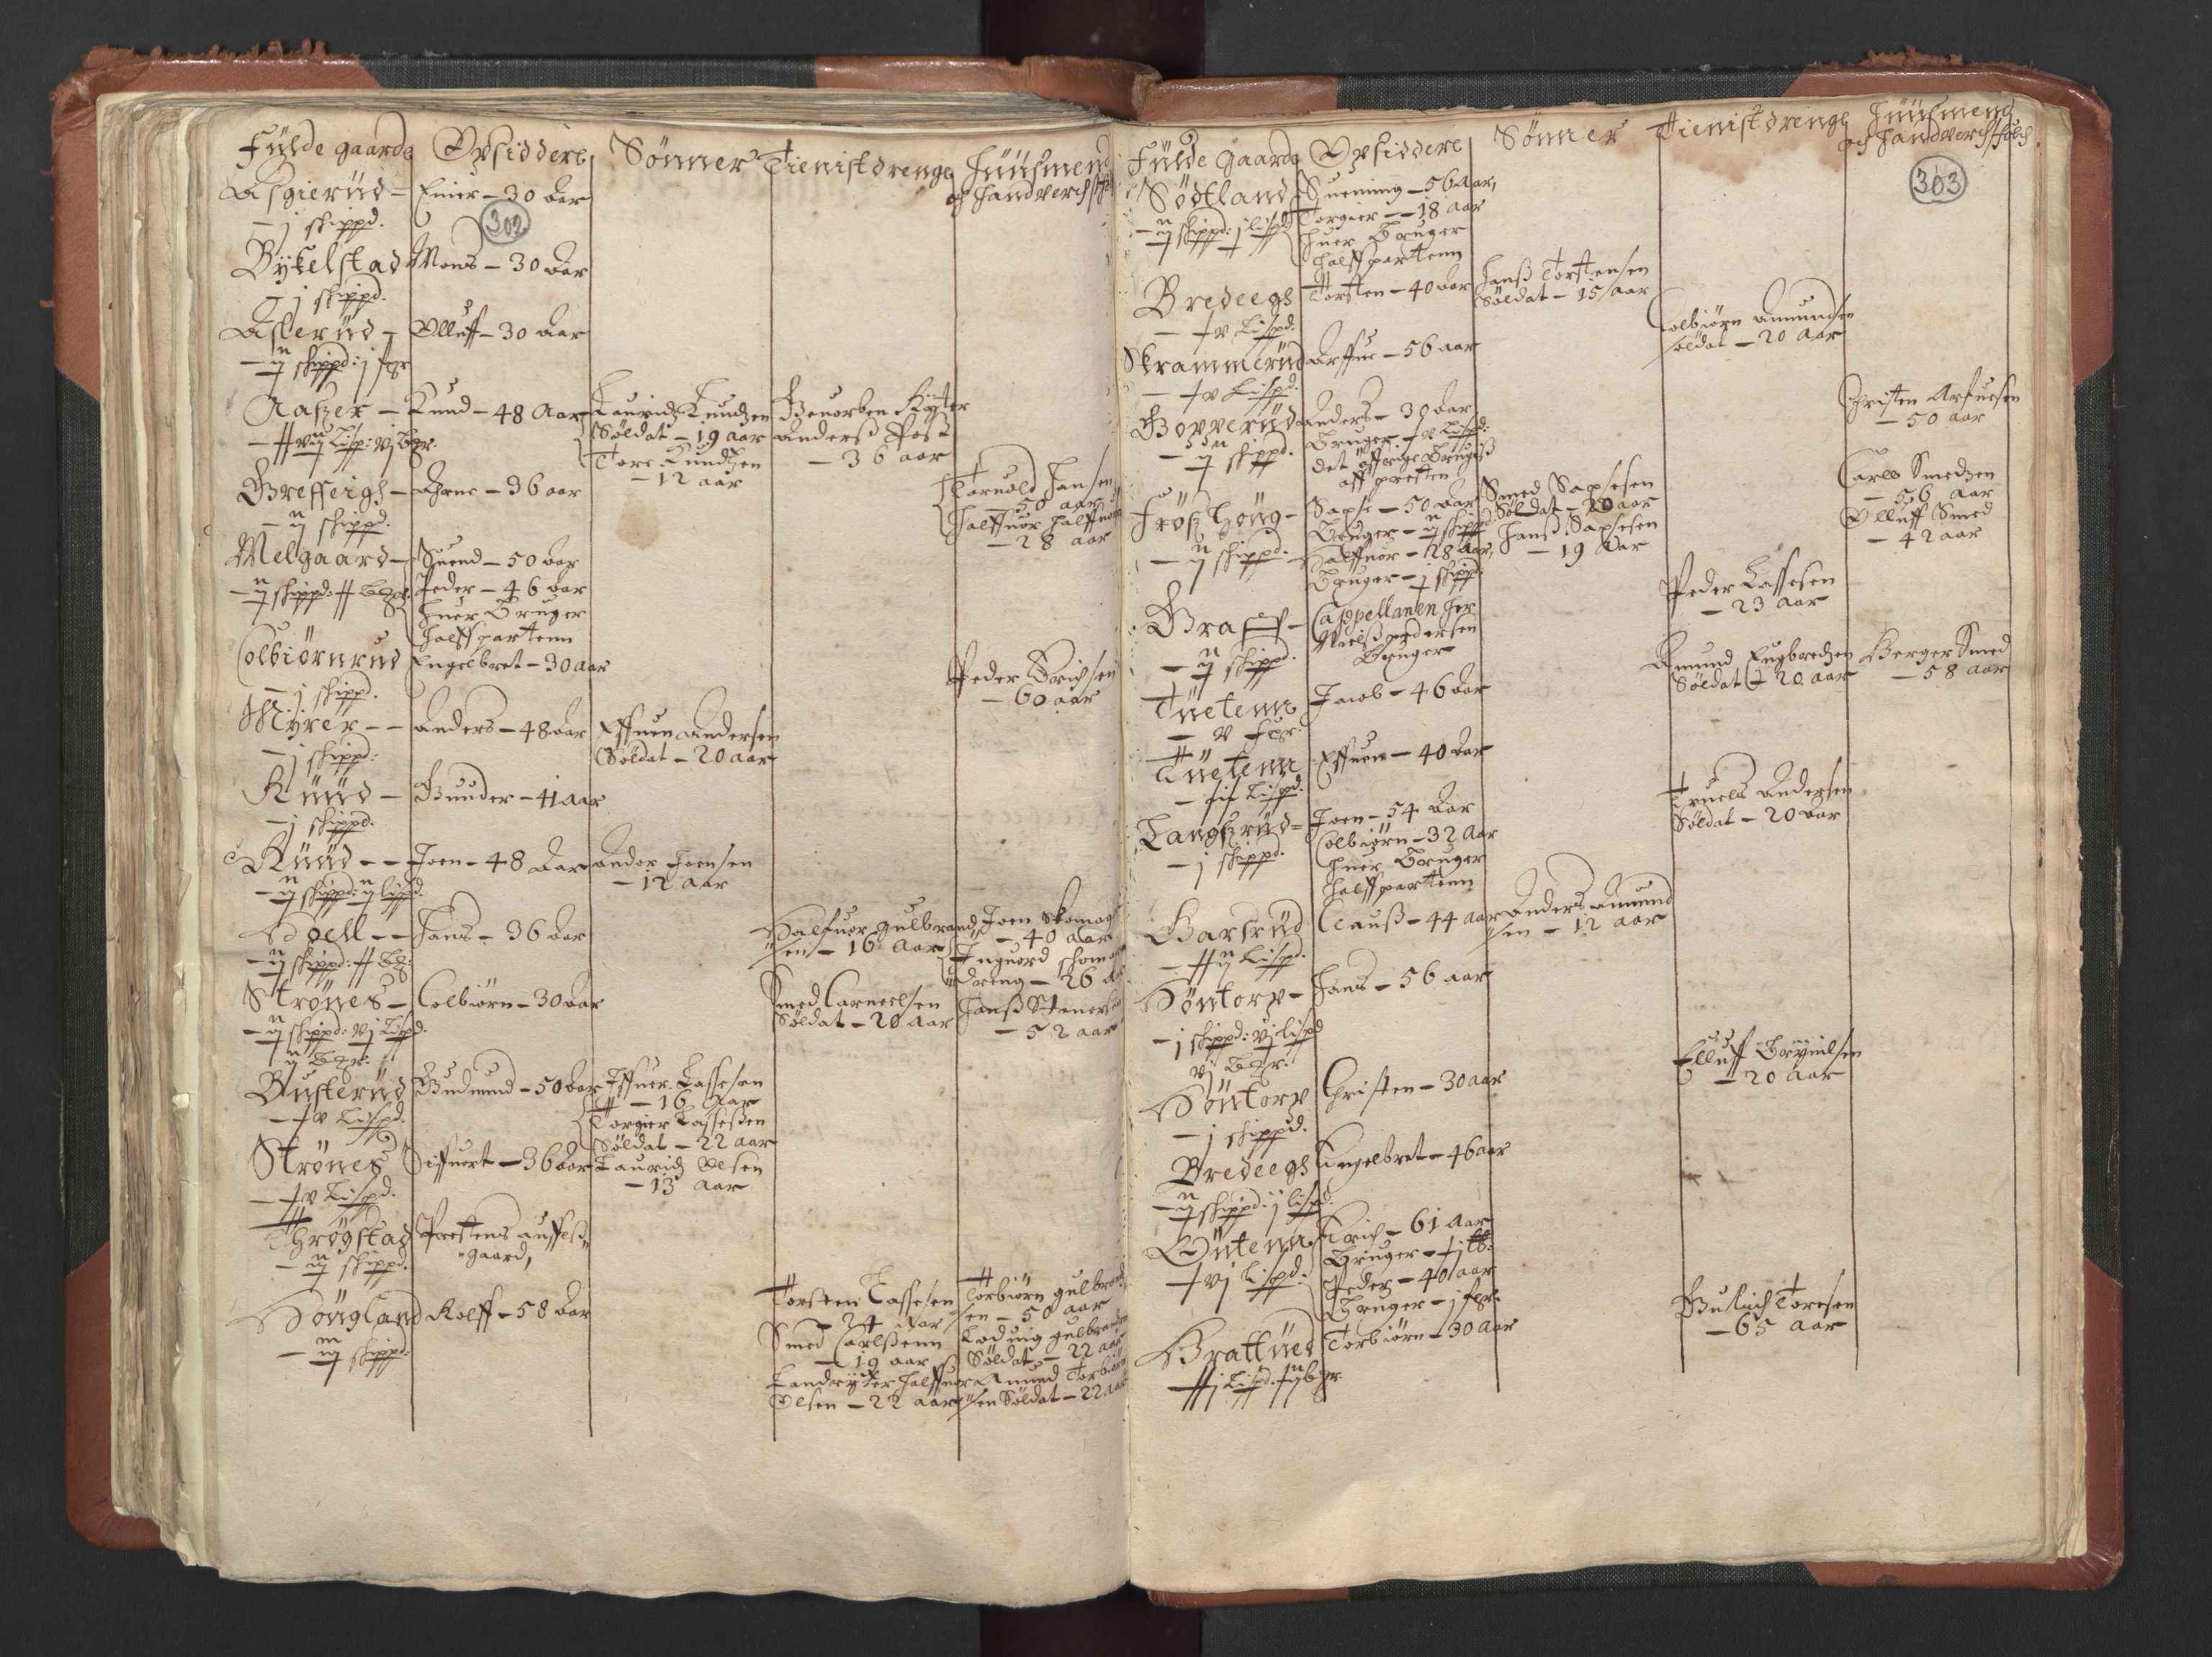 RA, Fogdenes og sorenskrivernes manntall 1664-1666, nr. 1: Fogderier (len og skipreider) i nåværende Østfold fylke, 1664, s. 302-303